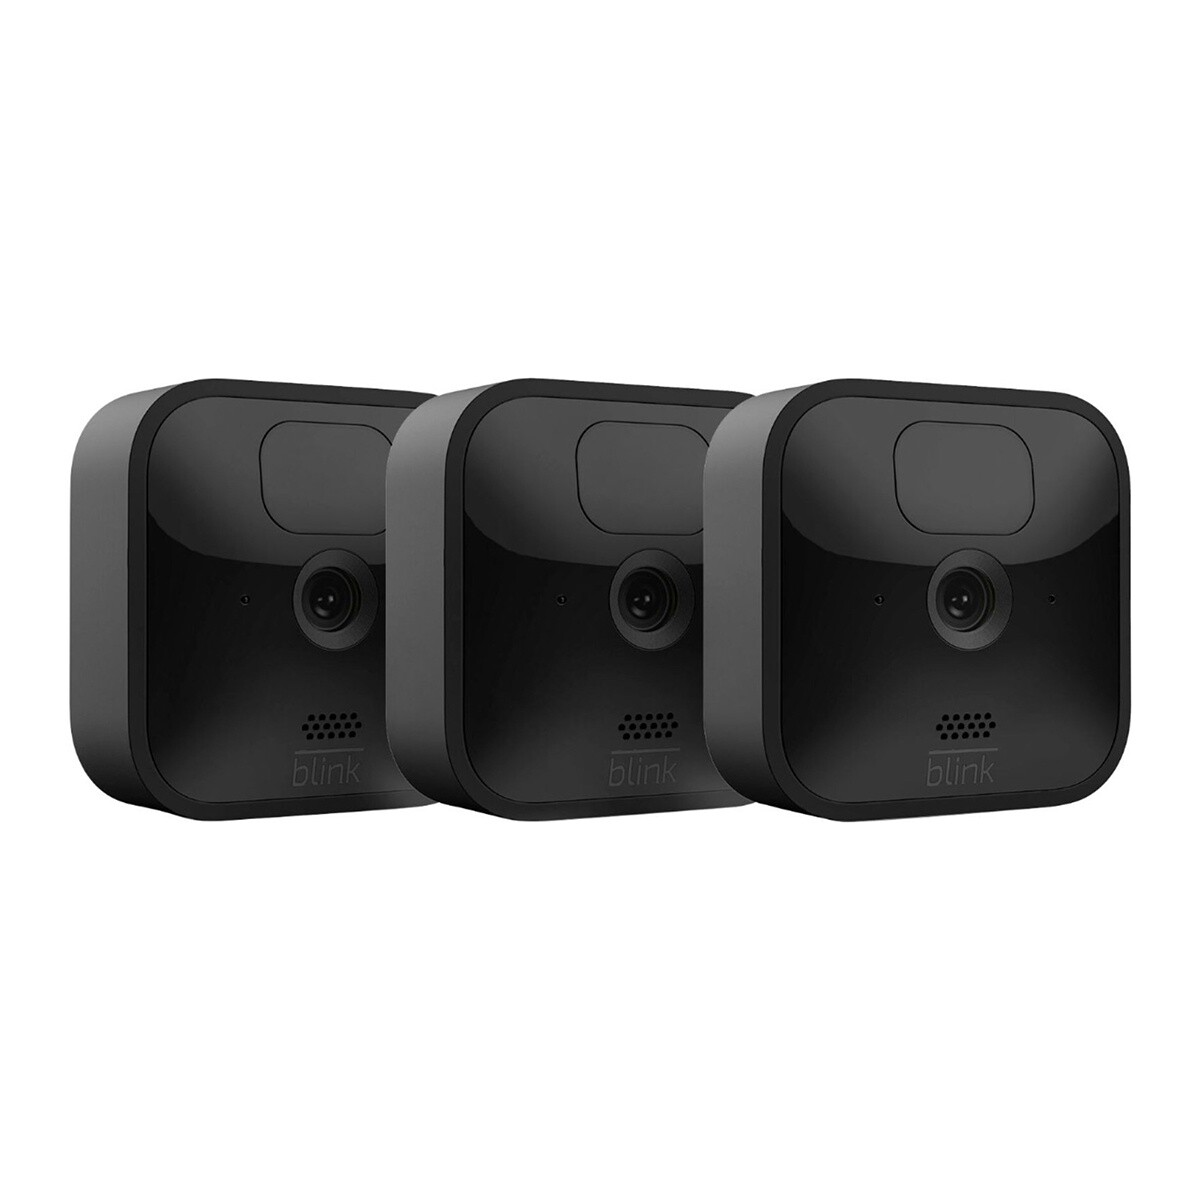 Pack x3 Cámara de Seguridad Blink 3 para Exteriores Outdoor Full HD Smart Wireless - Black 